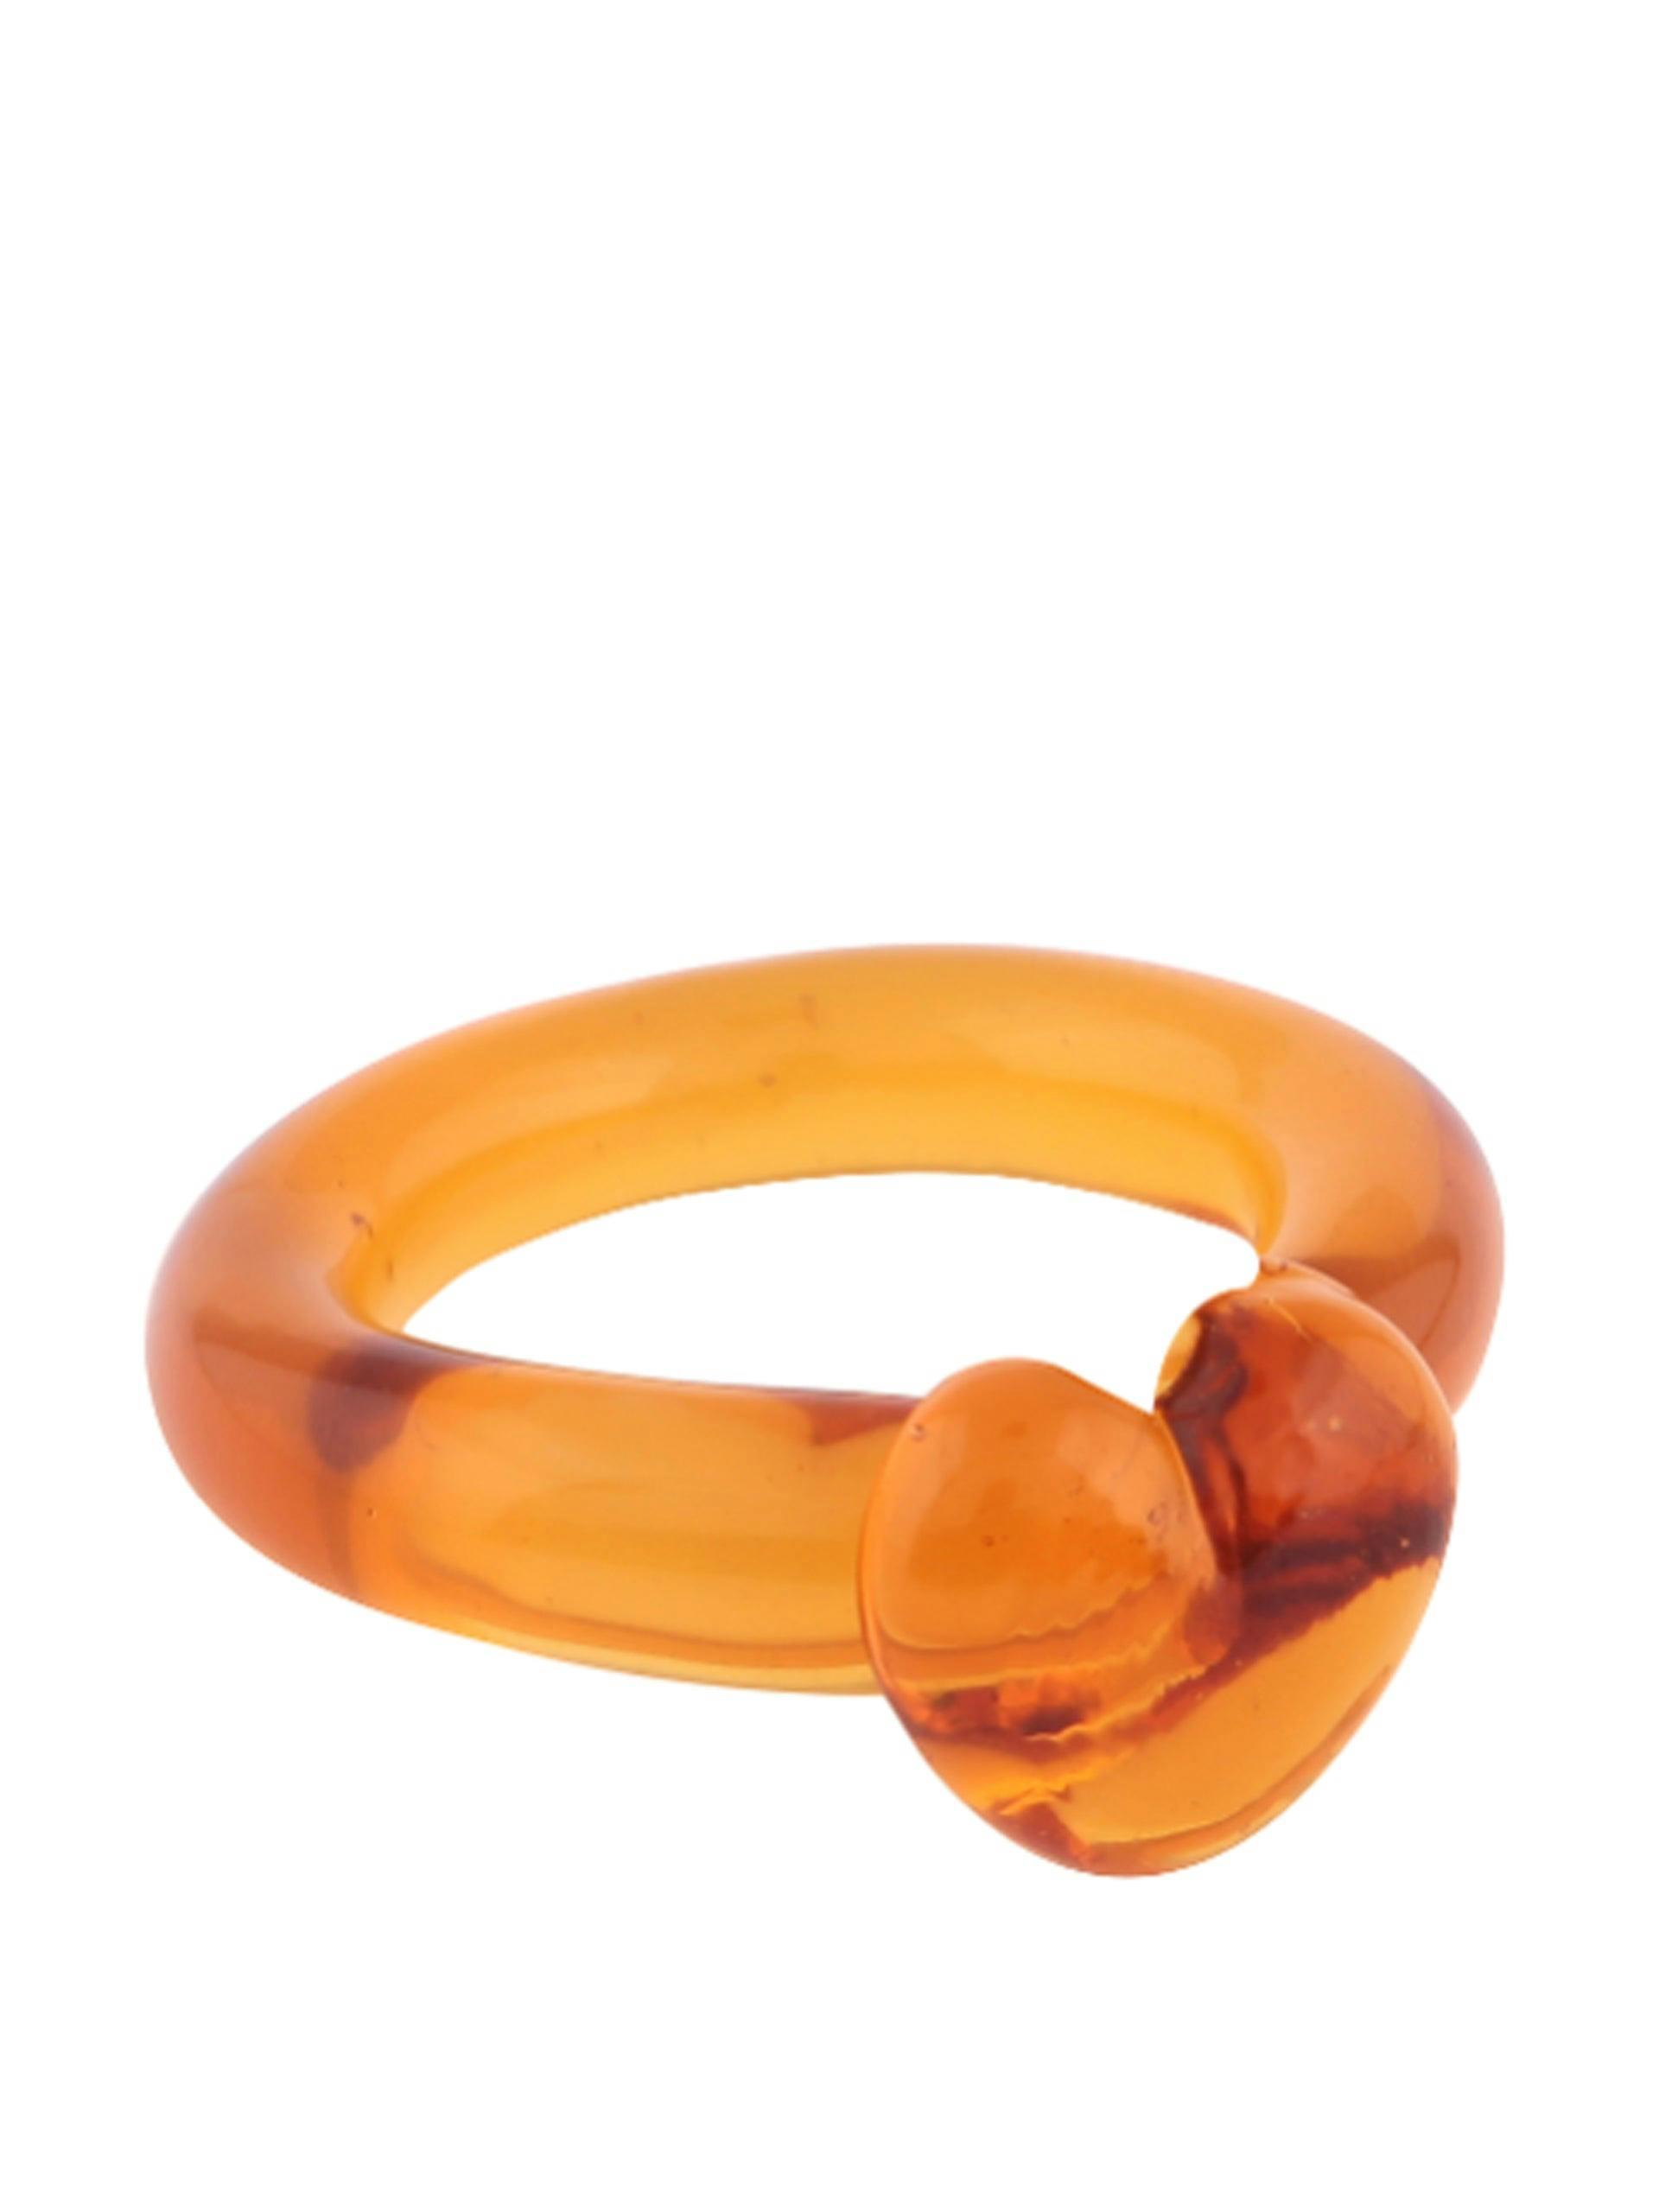 Love ring in amber